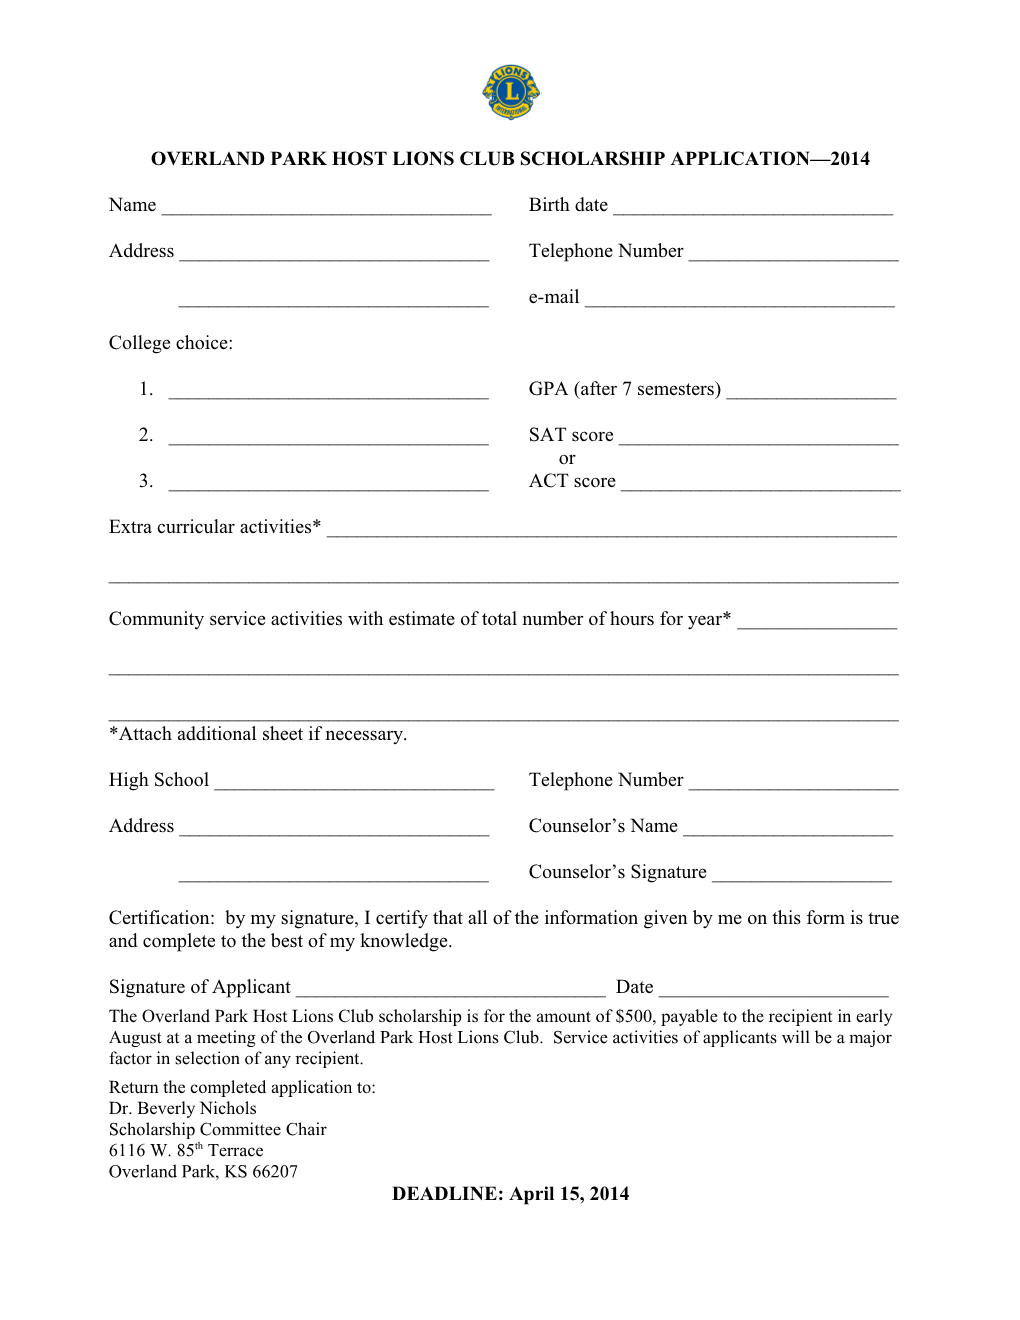 Overland Park Host Lions Club Scholarship Application 2009